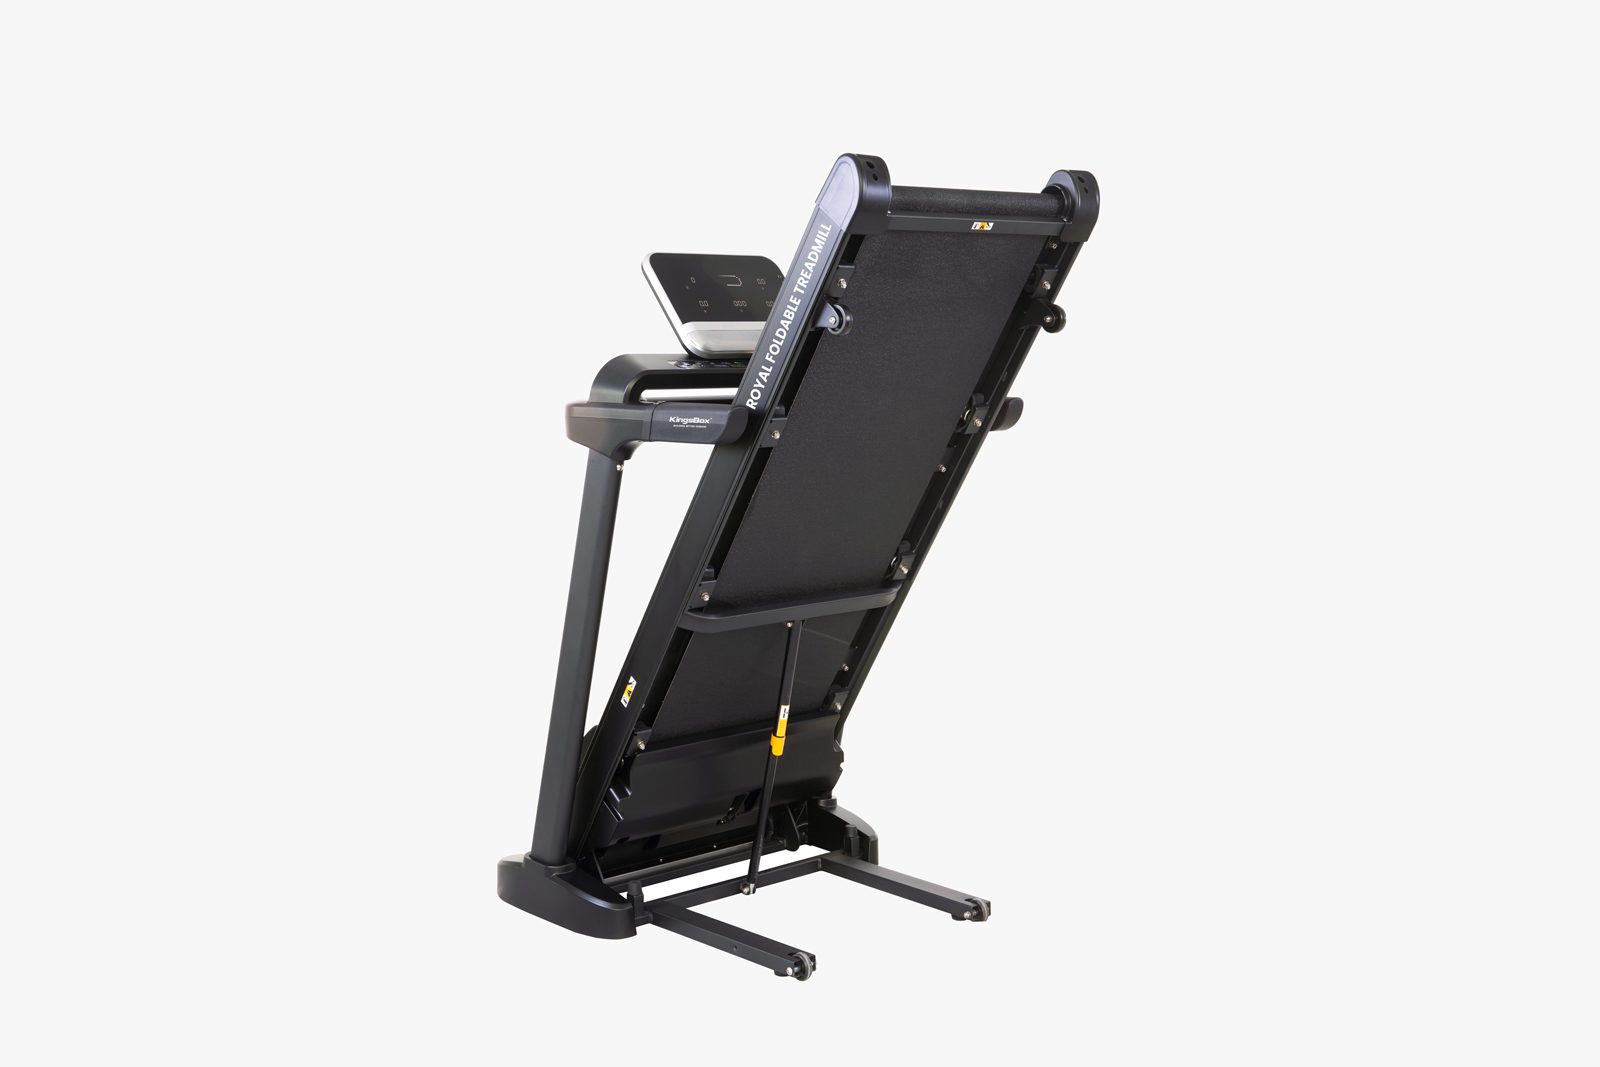 Gebruikt - Royal Foldable Treadmill | KingsBox